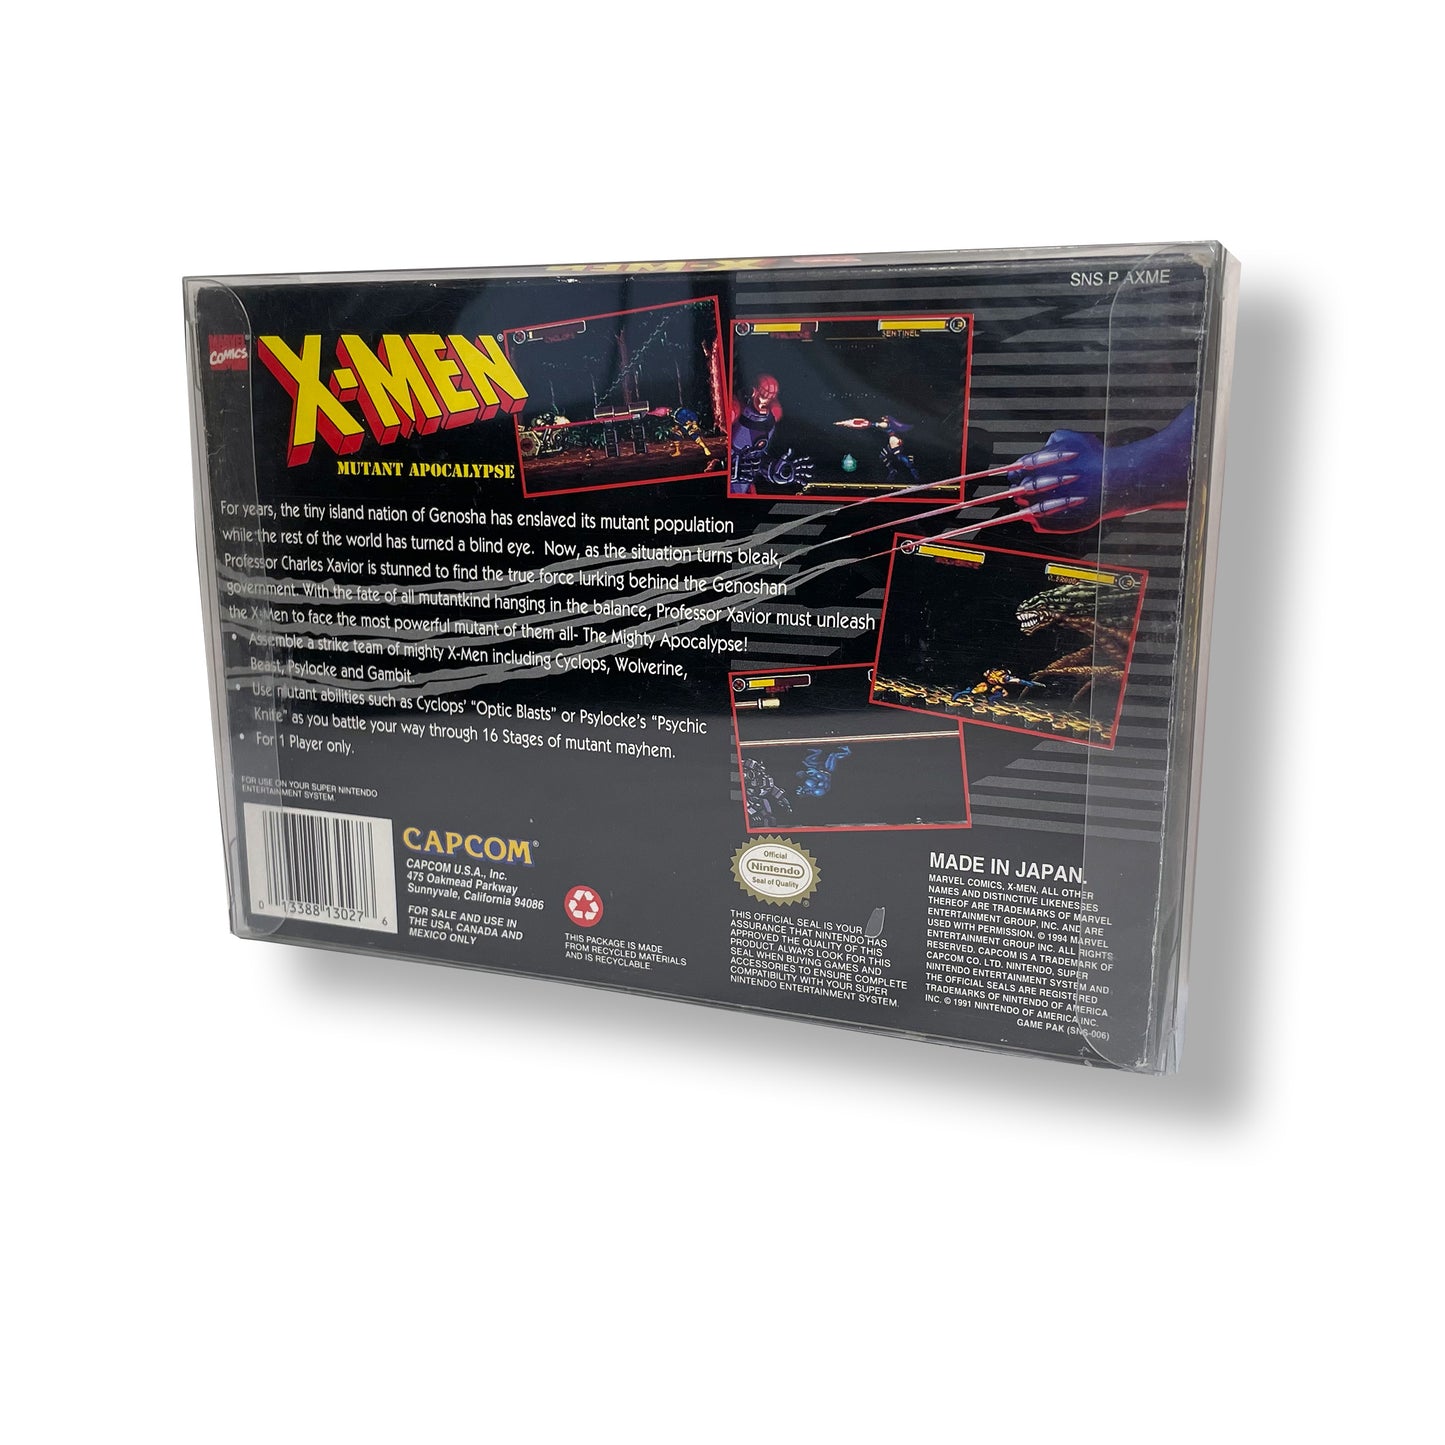 X-Men Mutant Apocalypse for Super Nintendo